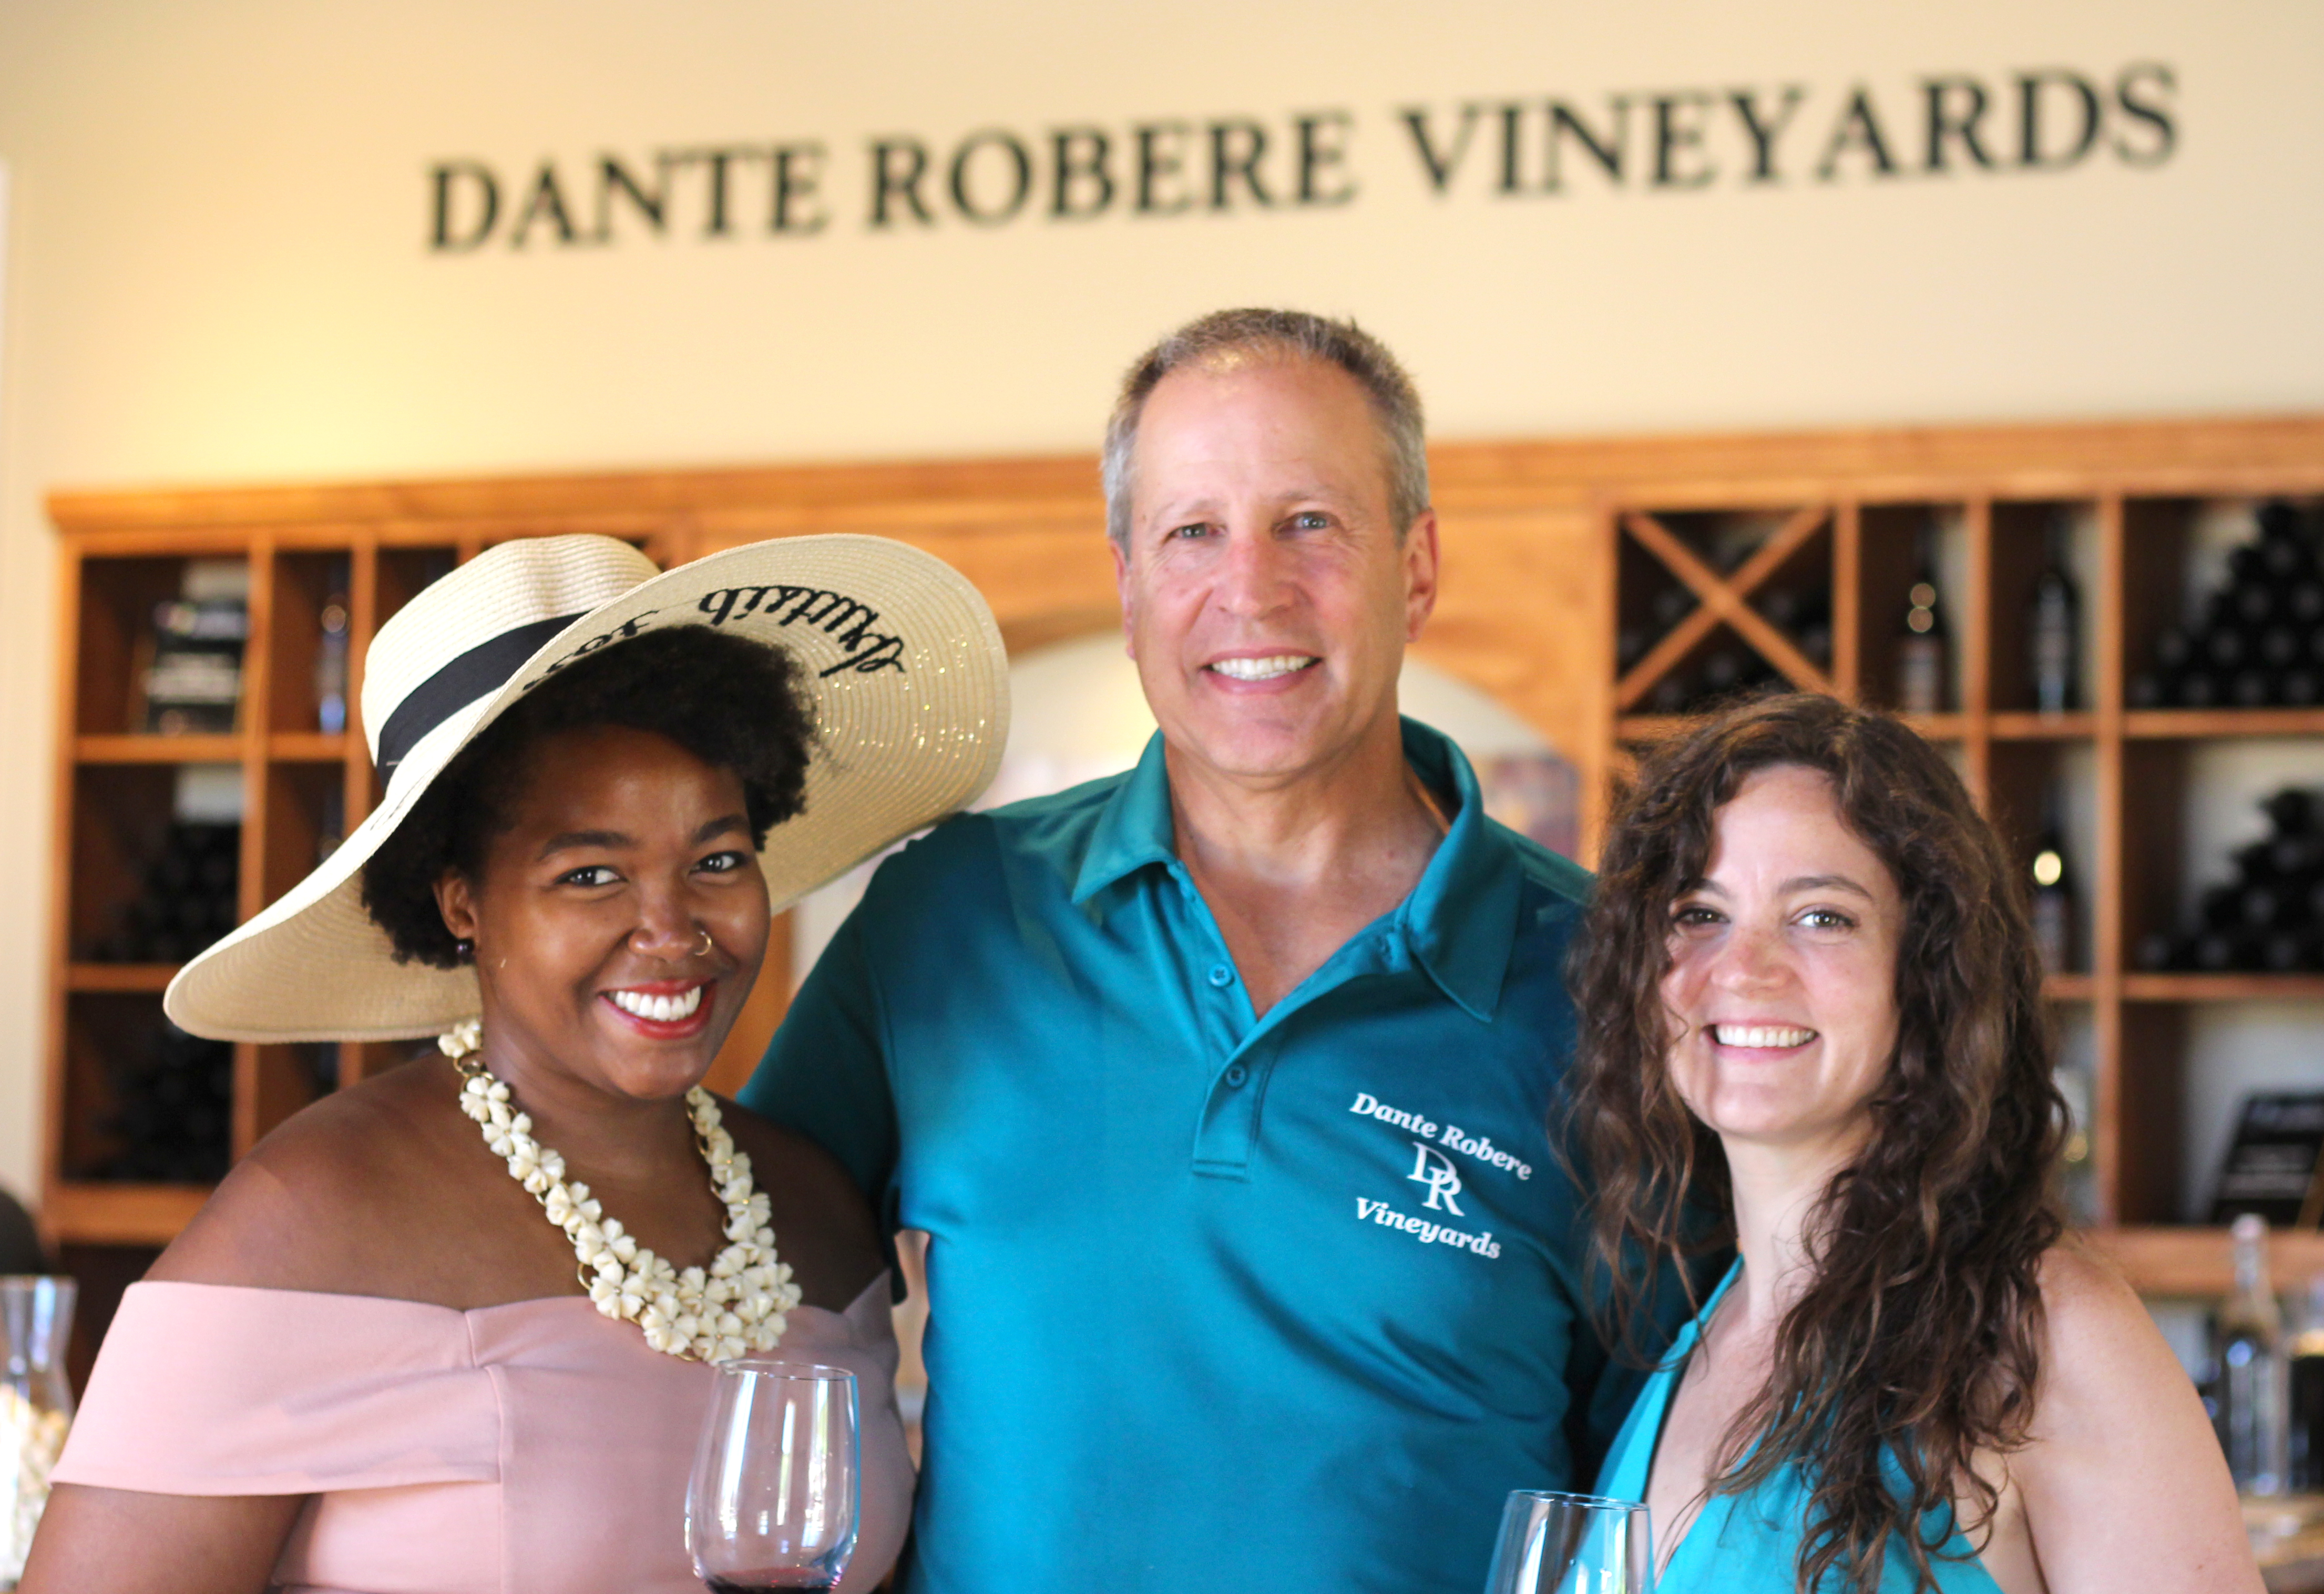 With Dan of Dante Robery winery